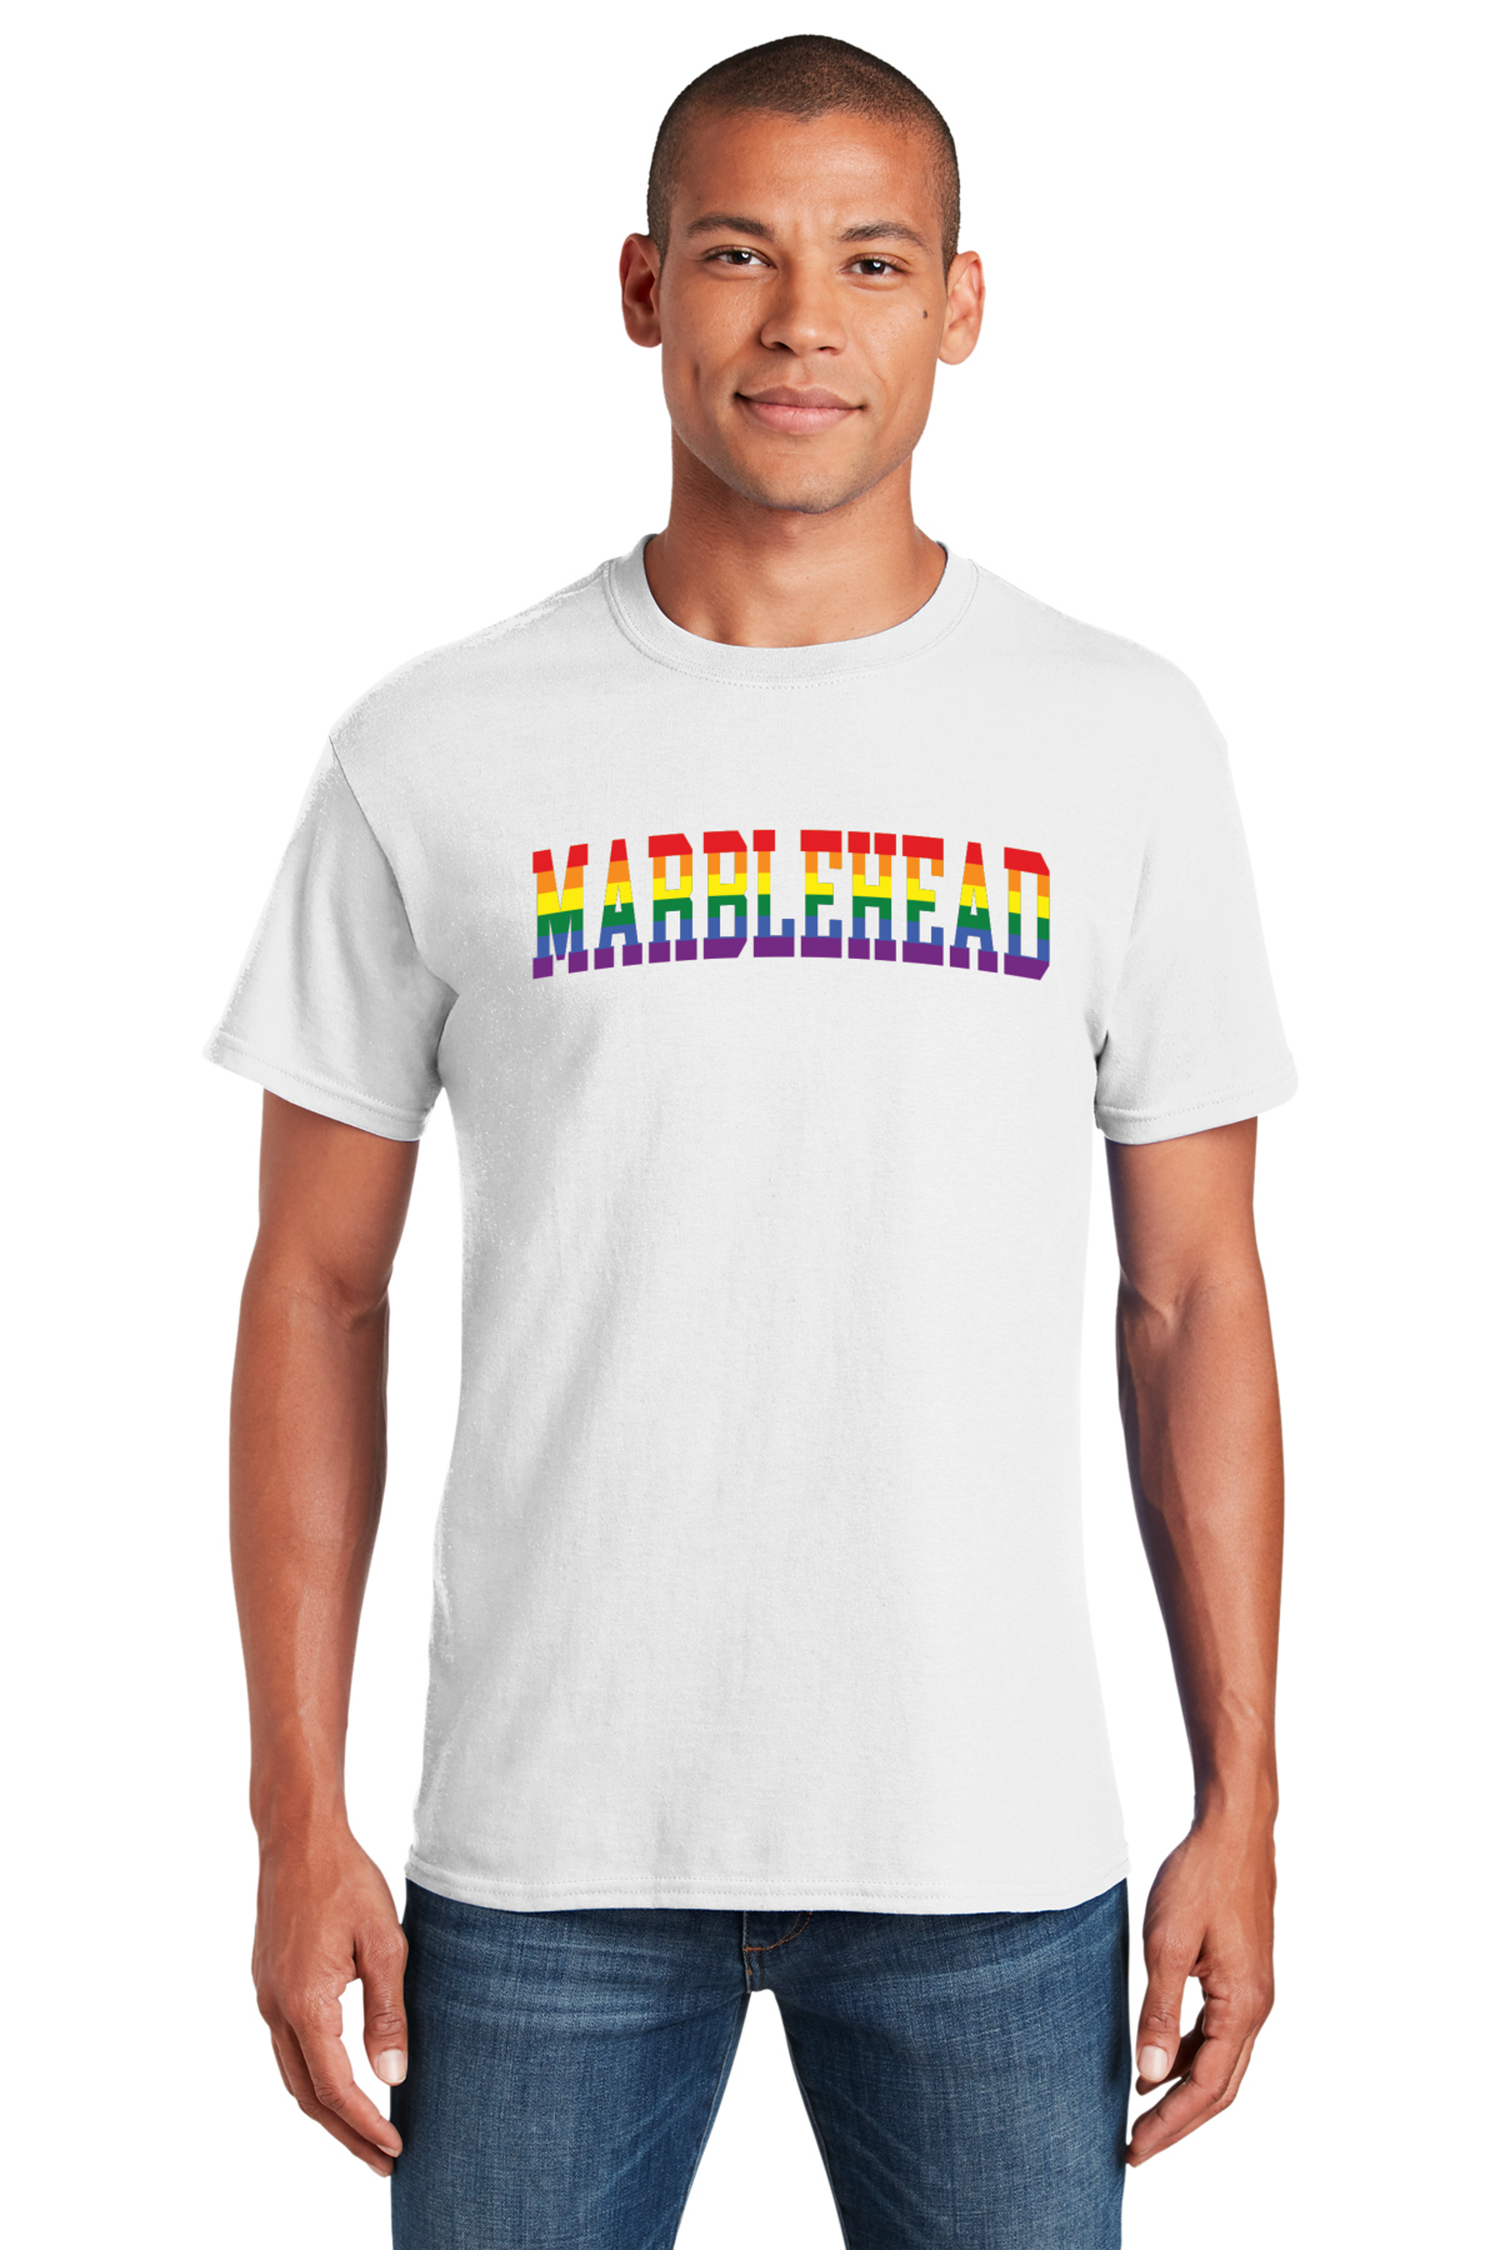 Marblehead Pride Heavyweight Tee